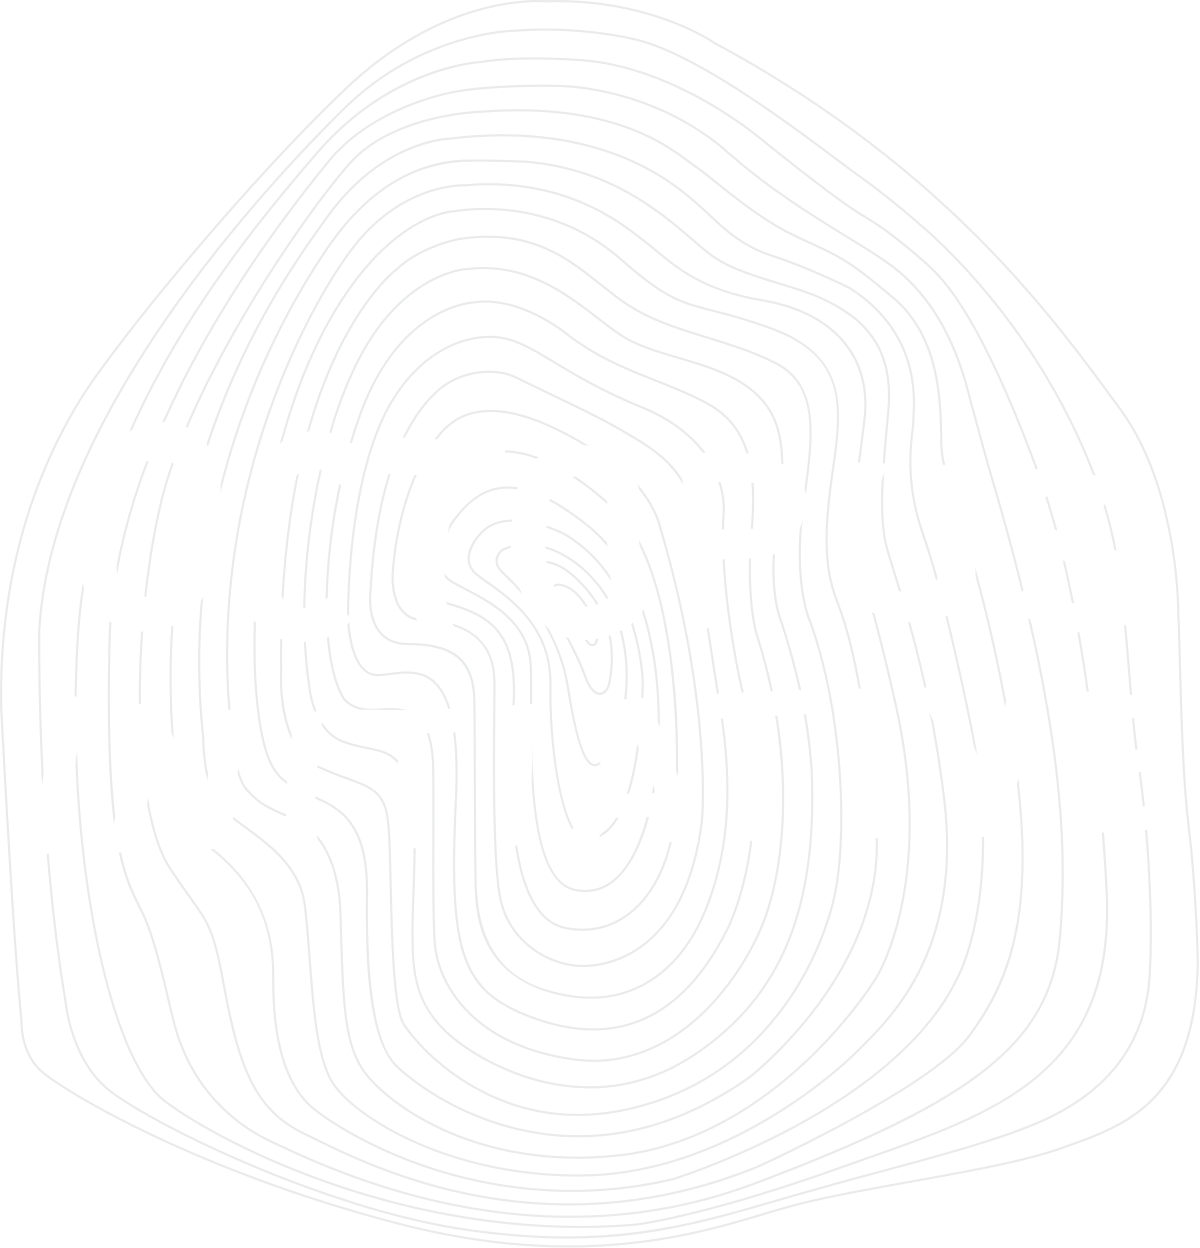 The Octopus Initiative logo